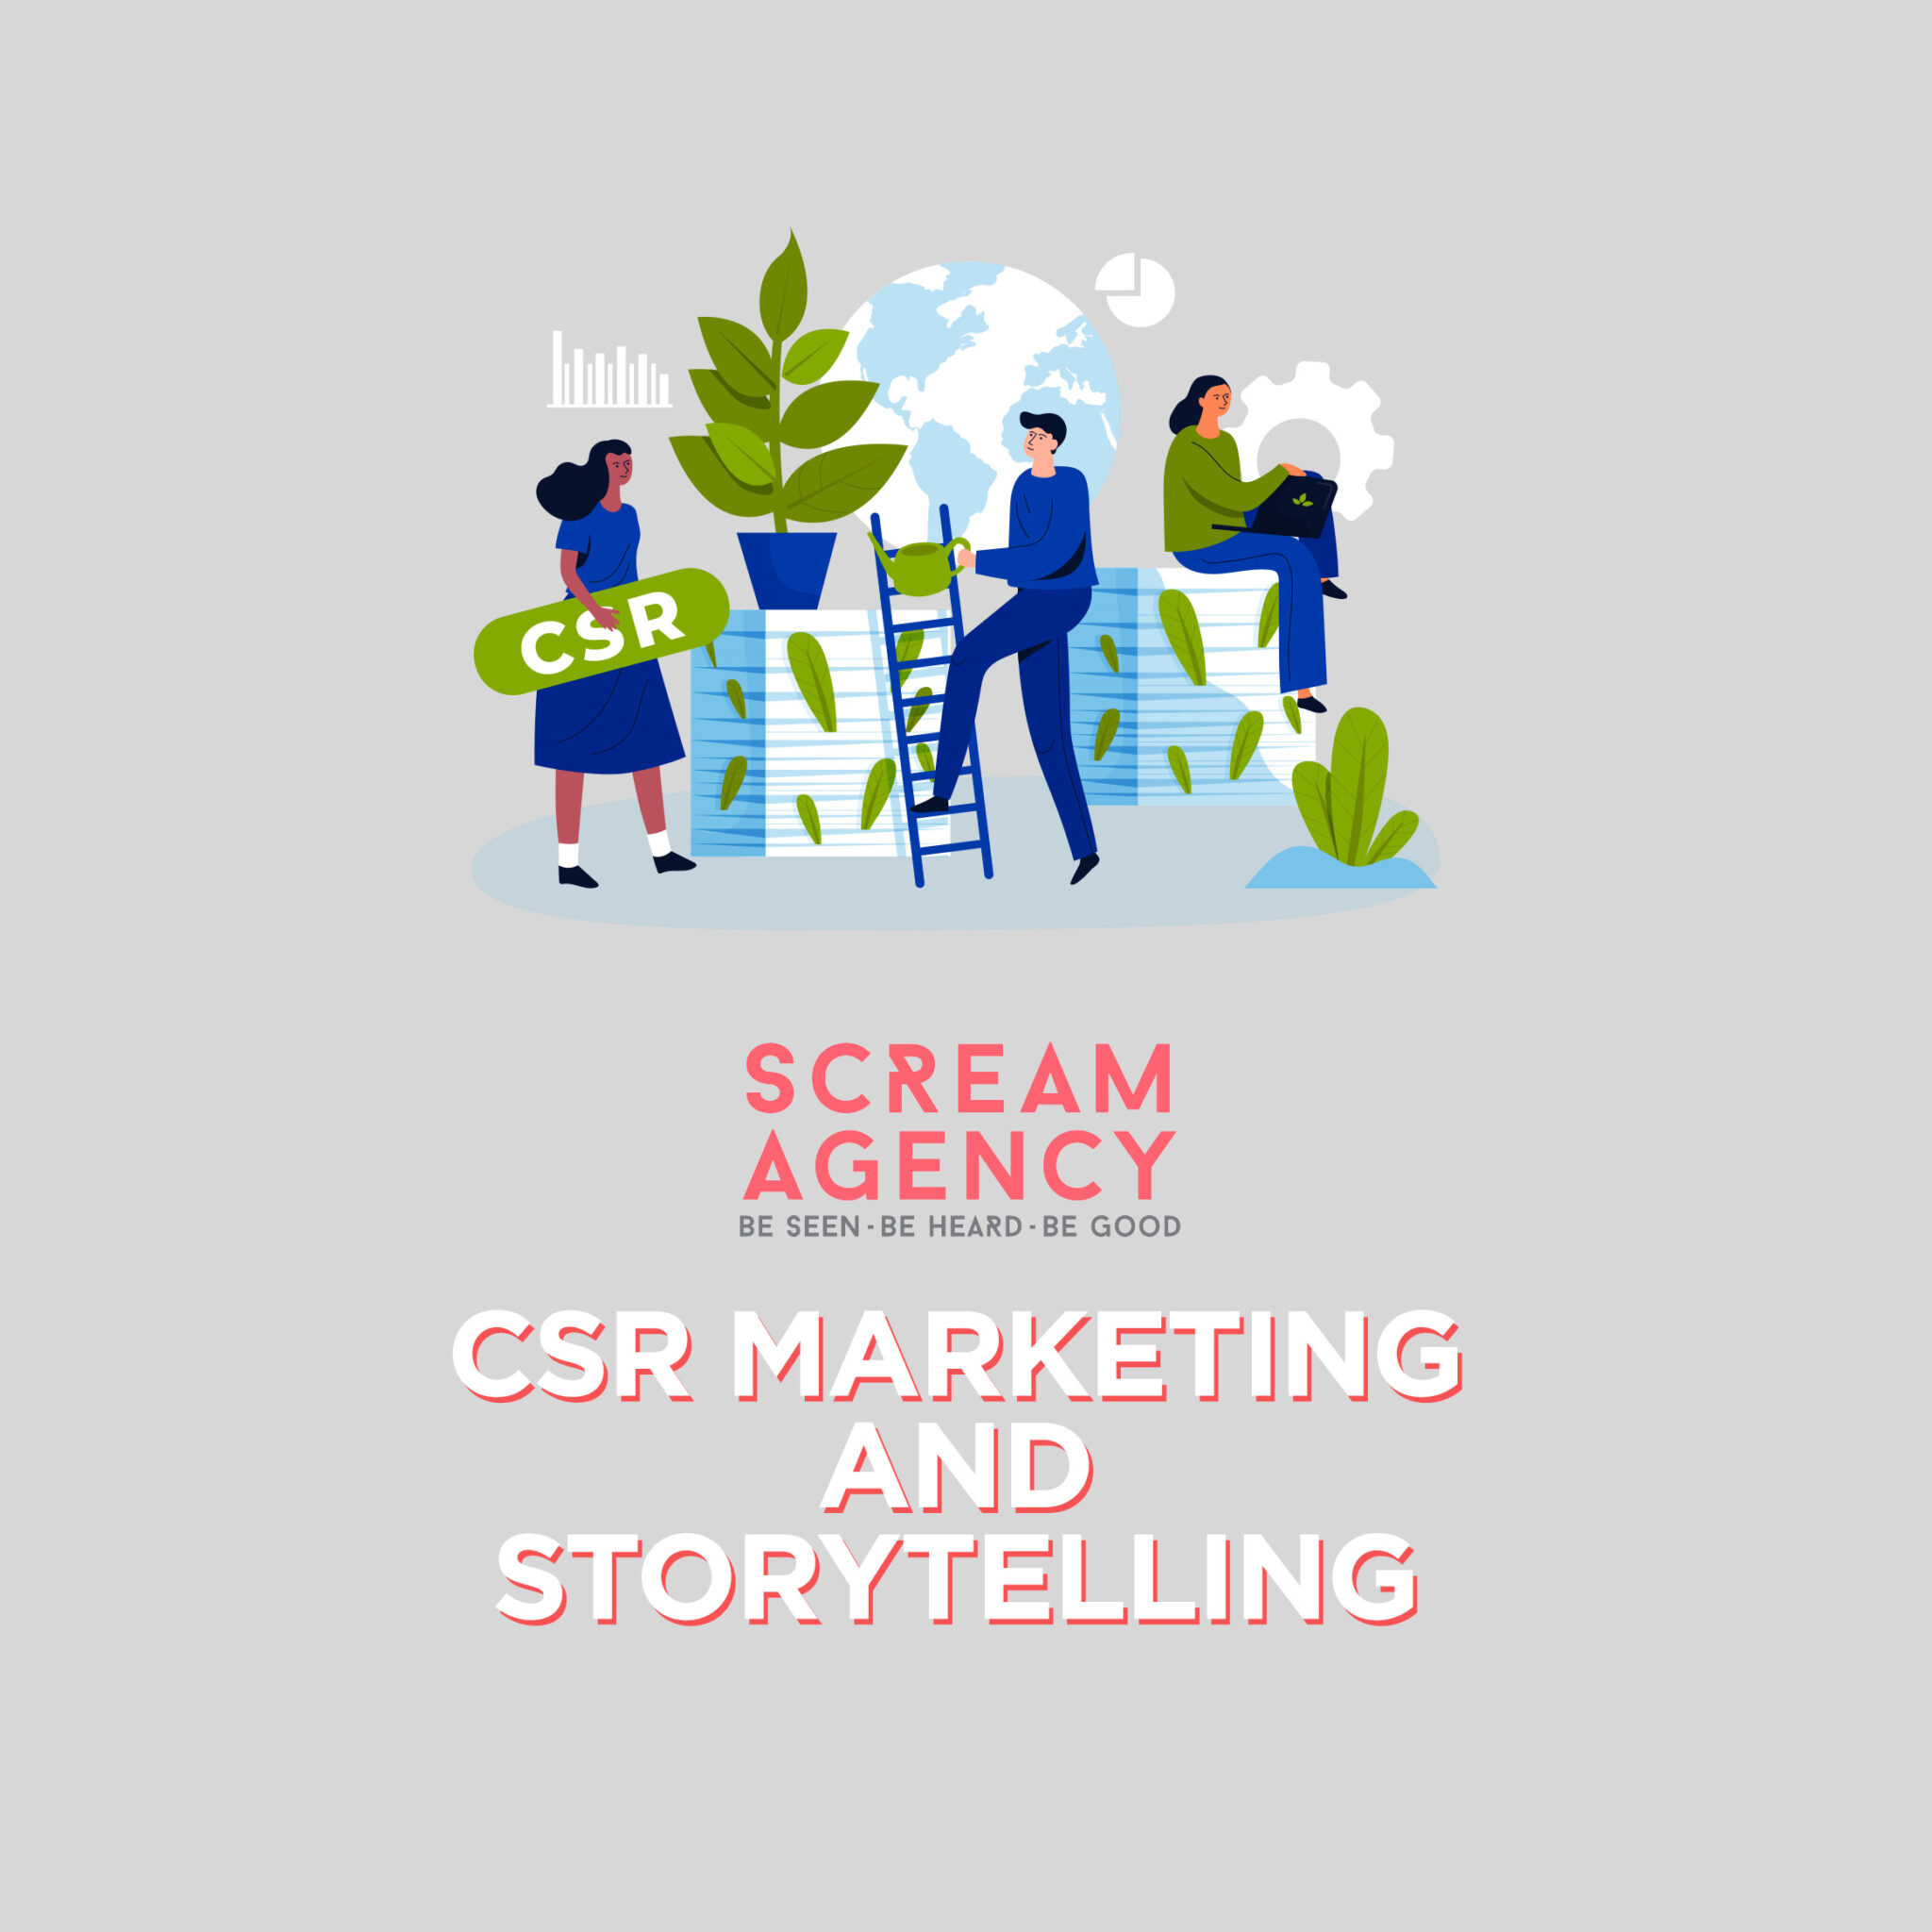 CSR Marketing & Storytelling — October B Local Colorado Marketing Group Meeting